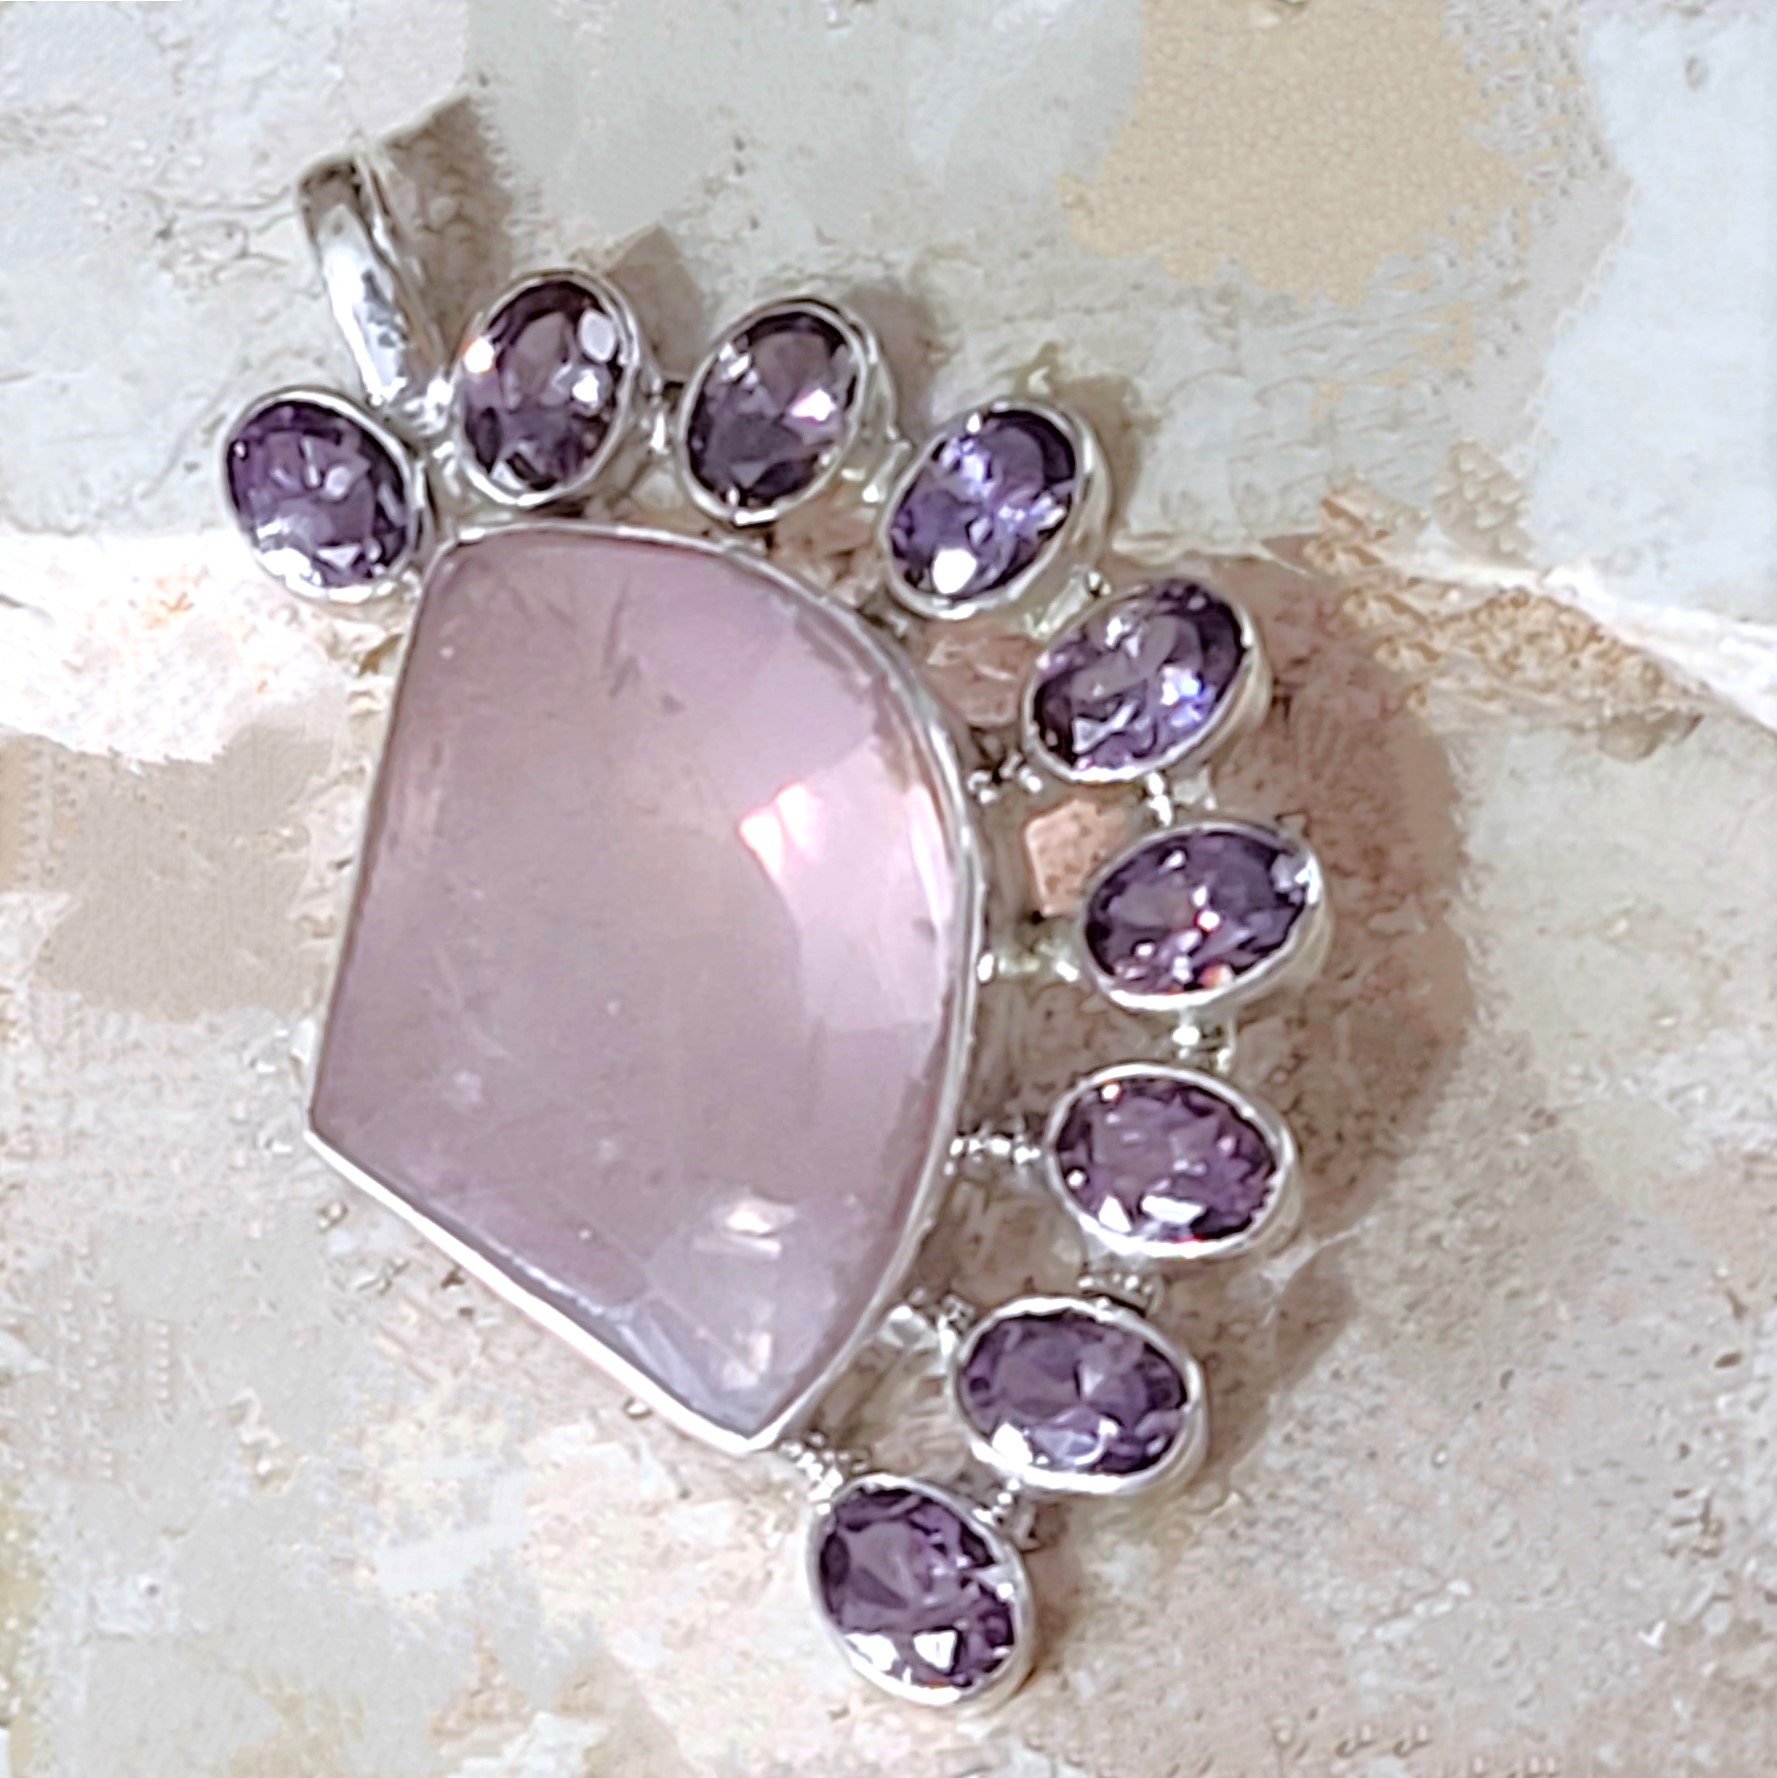 Rose quartz pendant with amethyst surrounding gemstones, moon shaped pendant set in 925 sterling silver